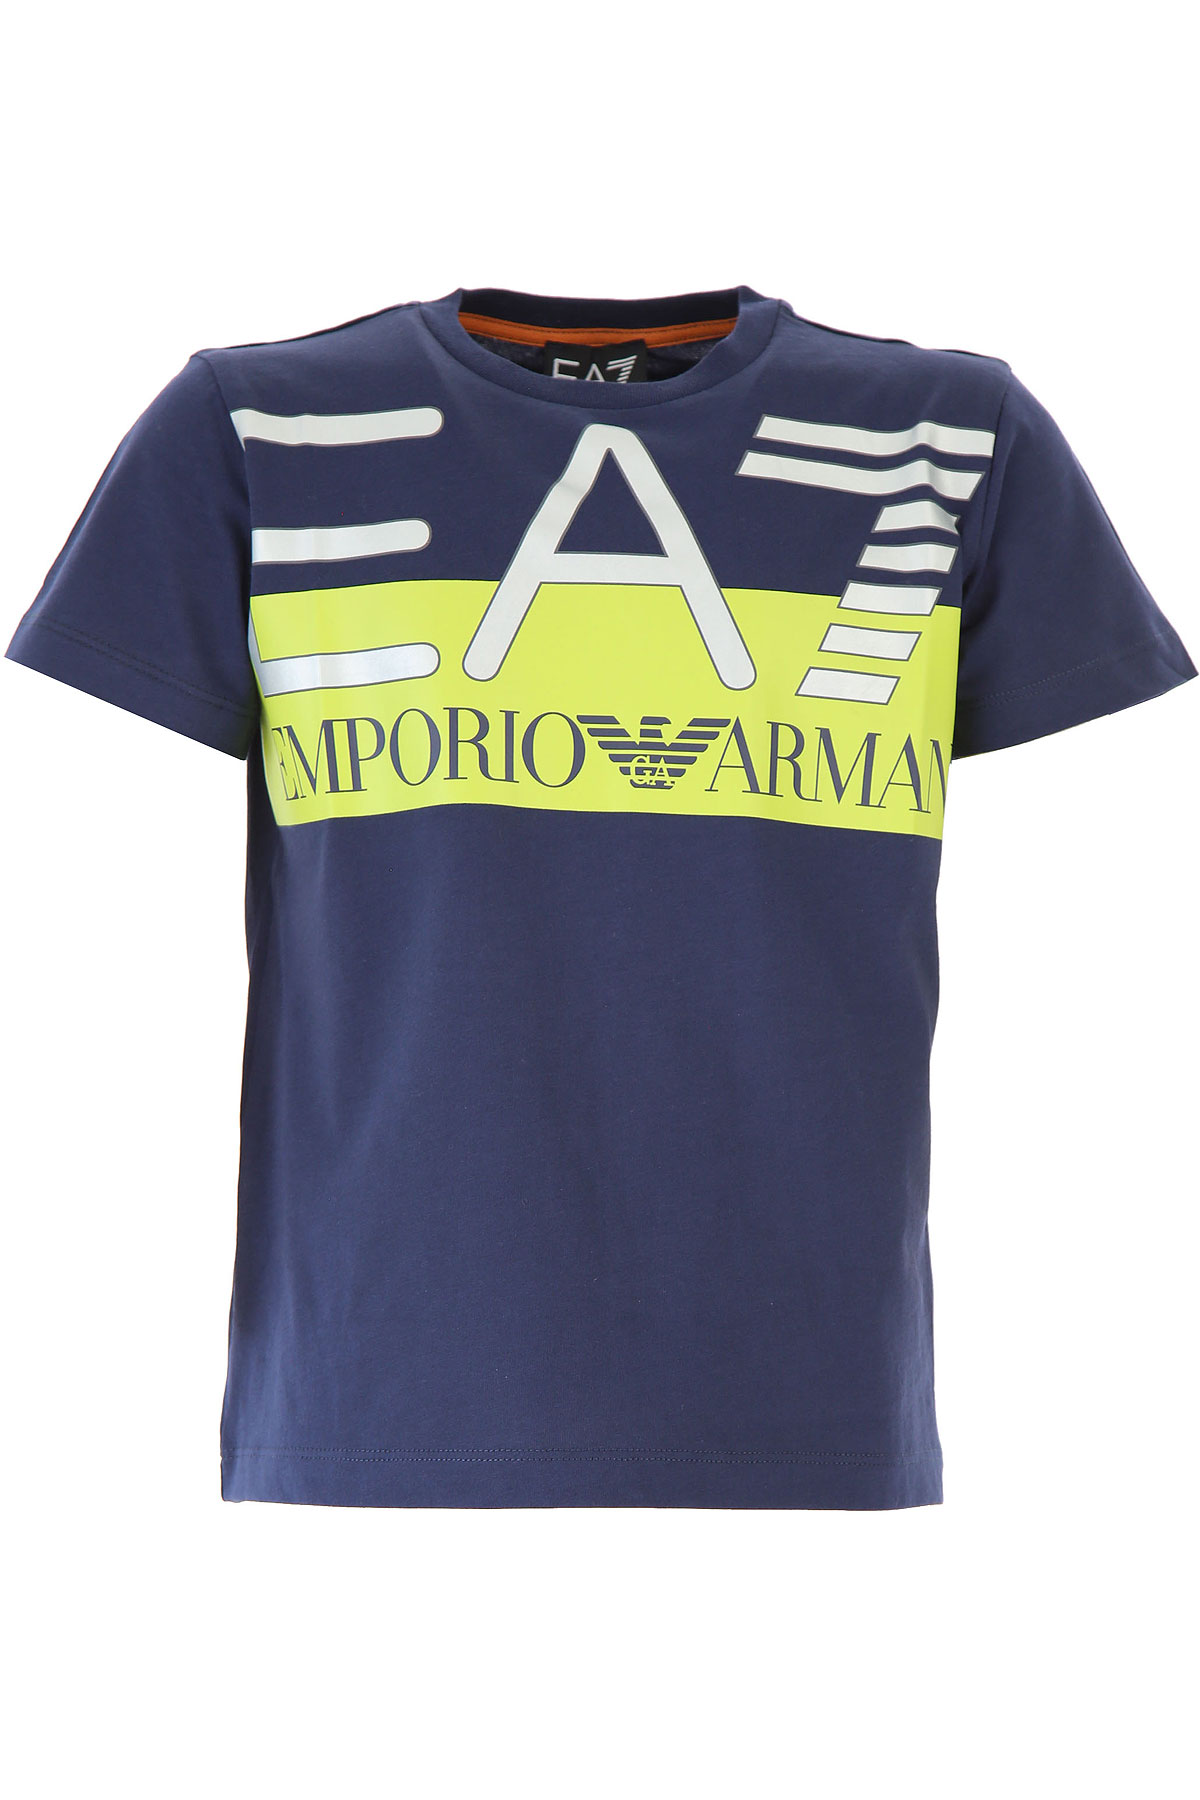 Emporio Armani Kinder T-Shirt für Jungen Günstig im Sale, Marineblau, Baumwolle, 2017, 10Y 12Y 14Y 4Y 6Y 8Y